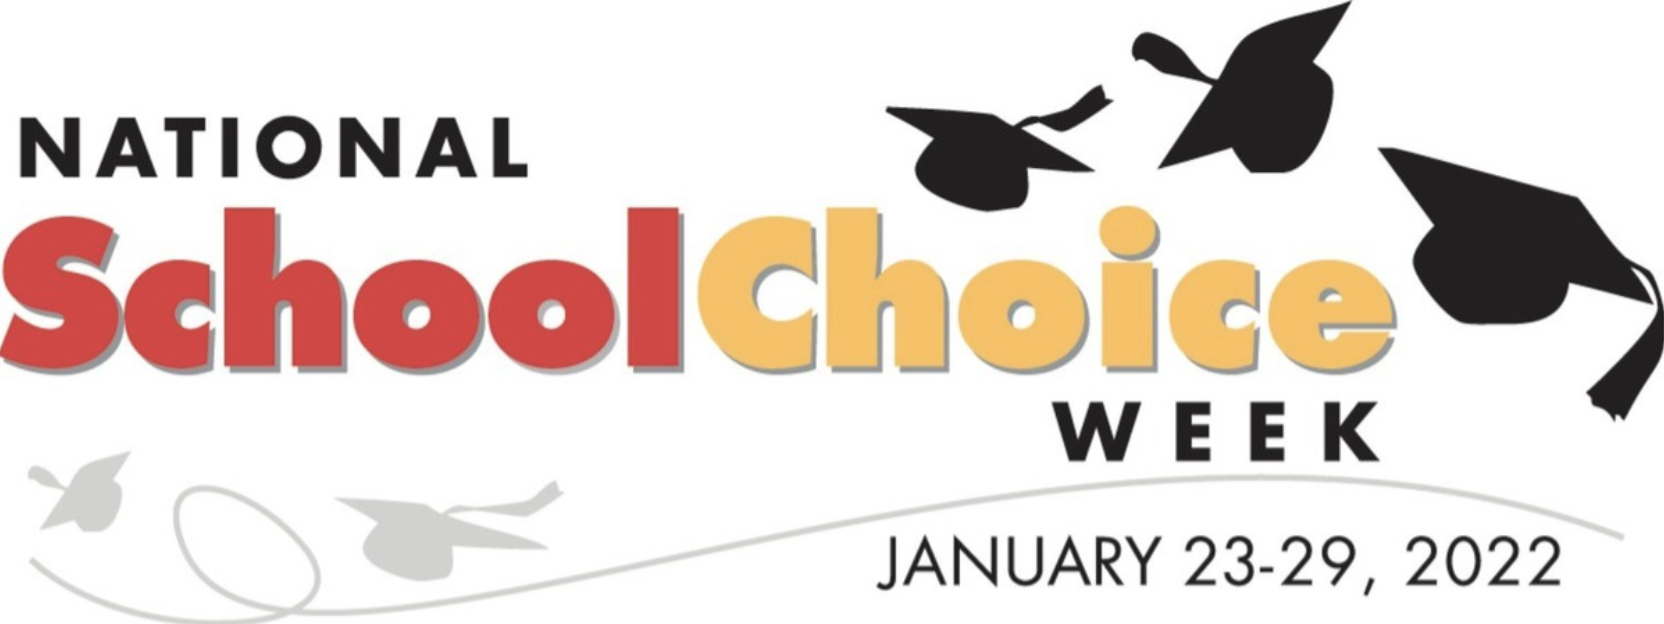 school choice week graphic